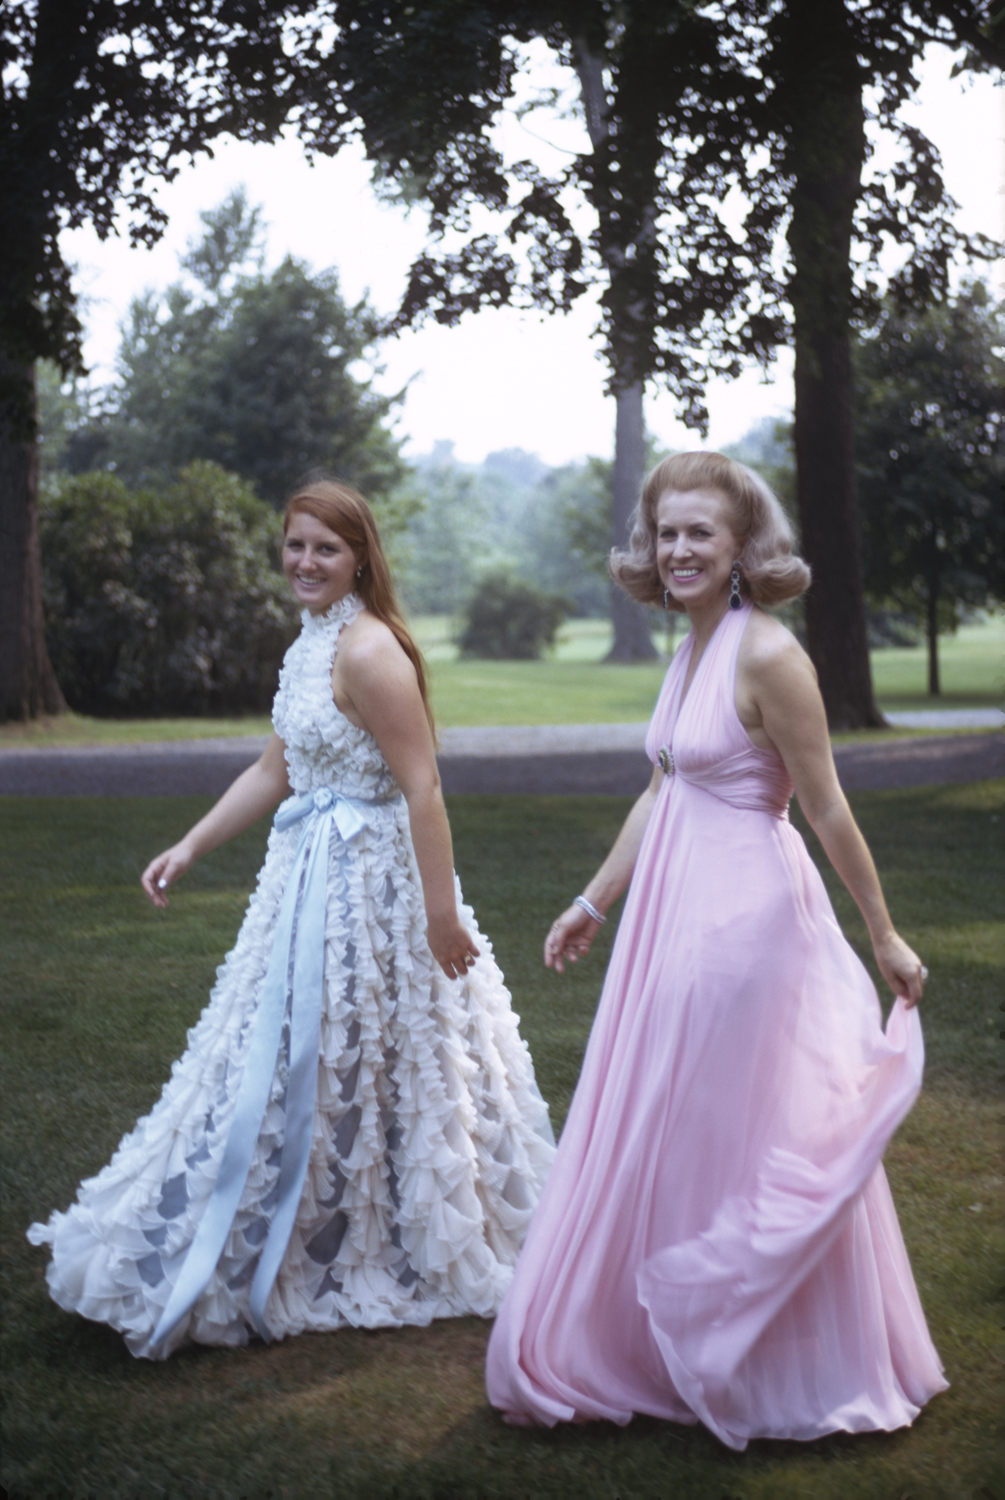 Marylou & Heather Whitney 1973